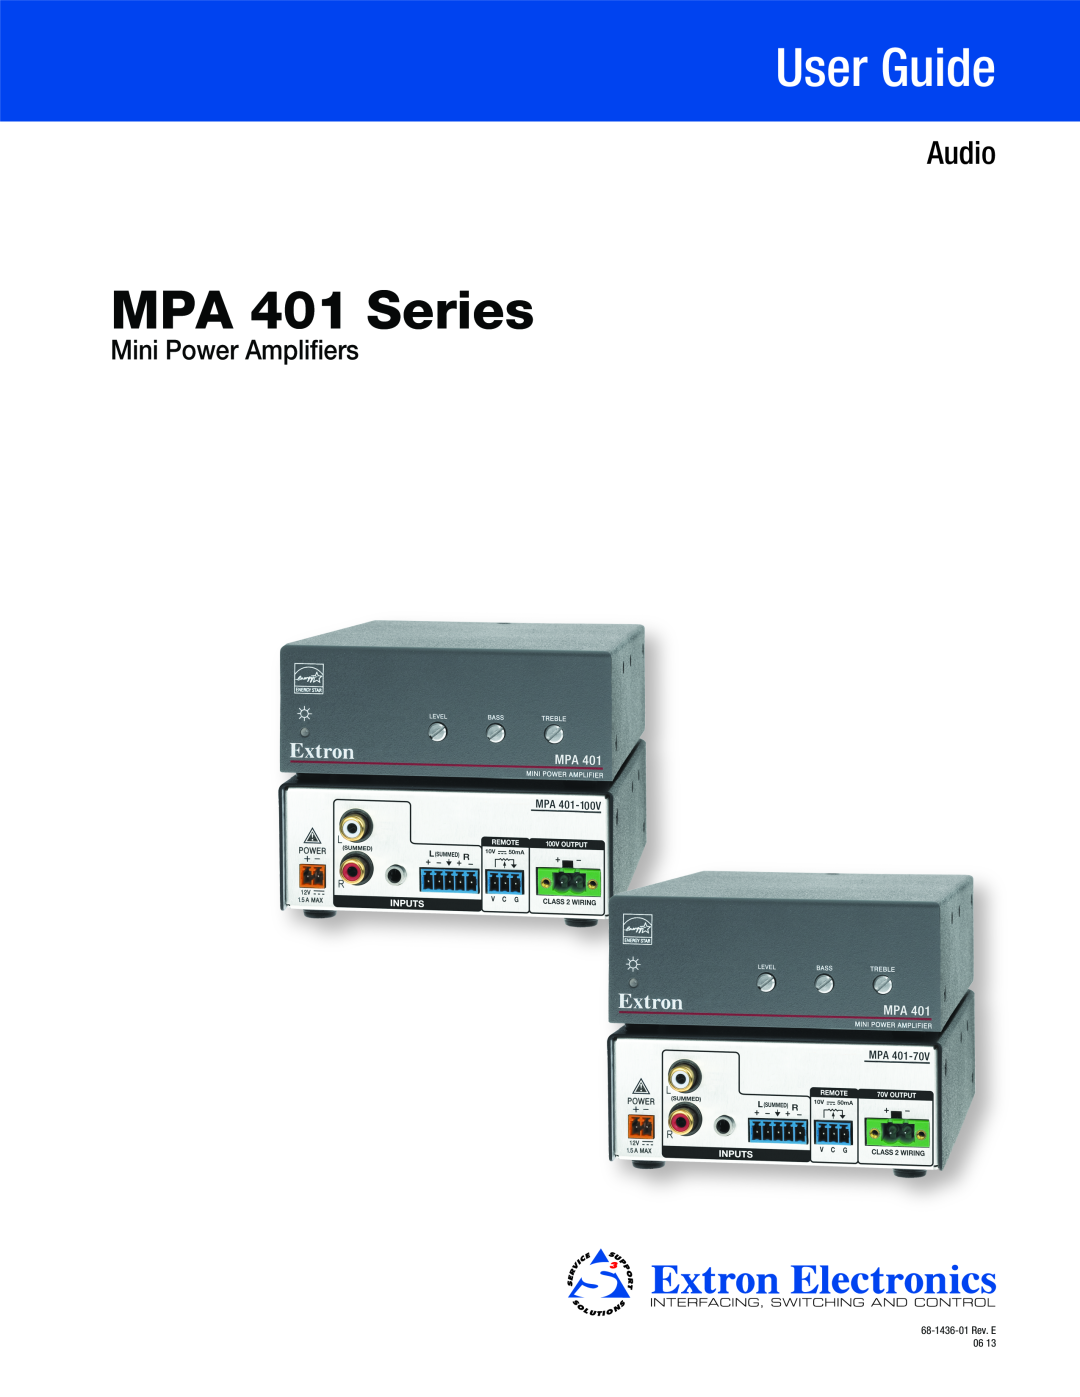 Extron electronic manual MPA 401 Series, User Guide, Audio, Mini Power Ampliﬁers 